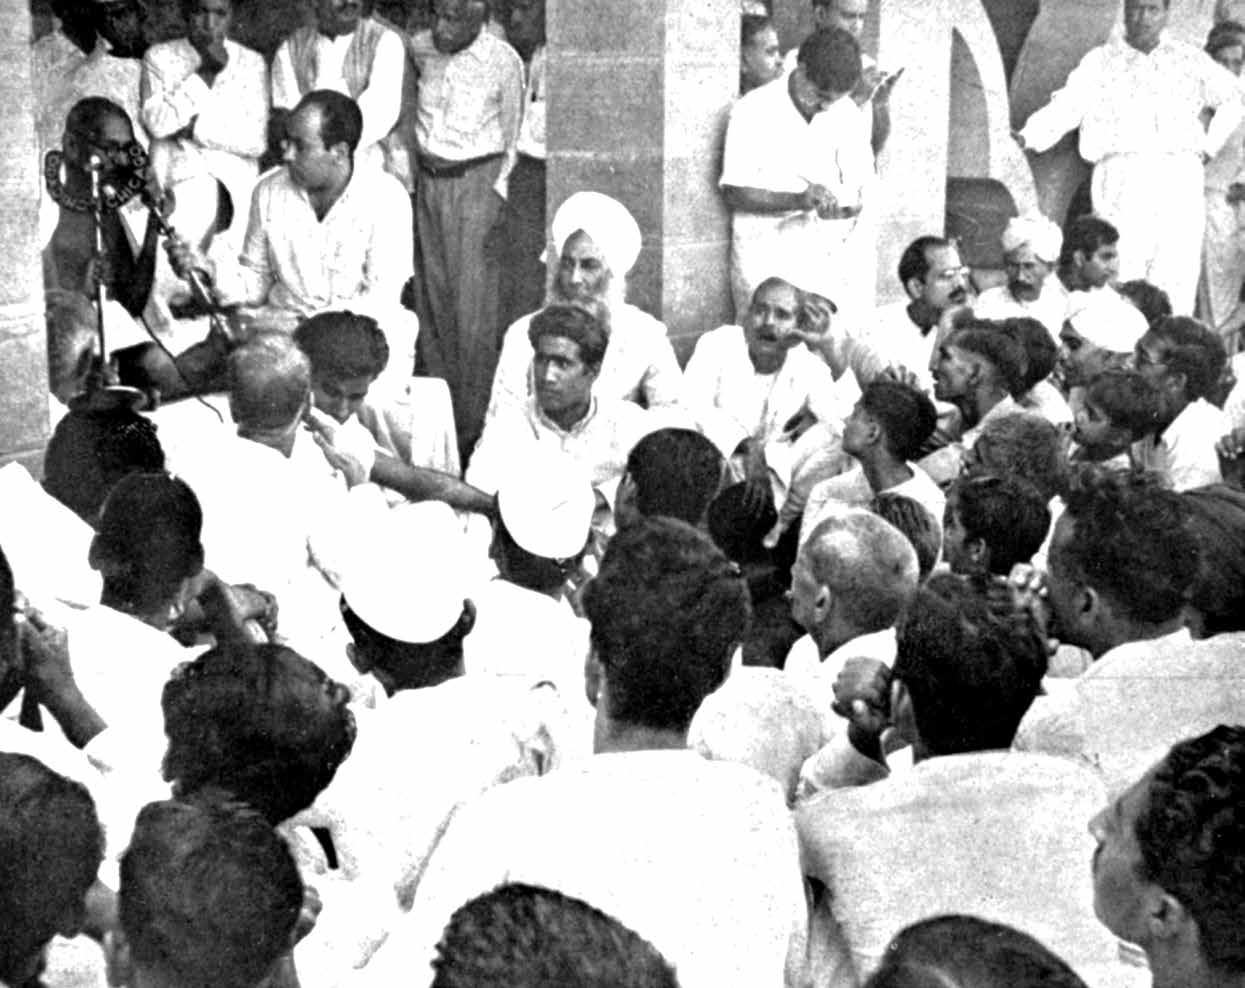 Mahatma Gandhi delivering a post-prayer speech in the garden of Birla House, New Delhi, January 1948